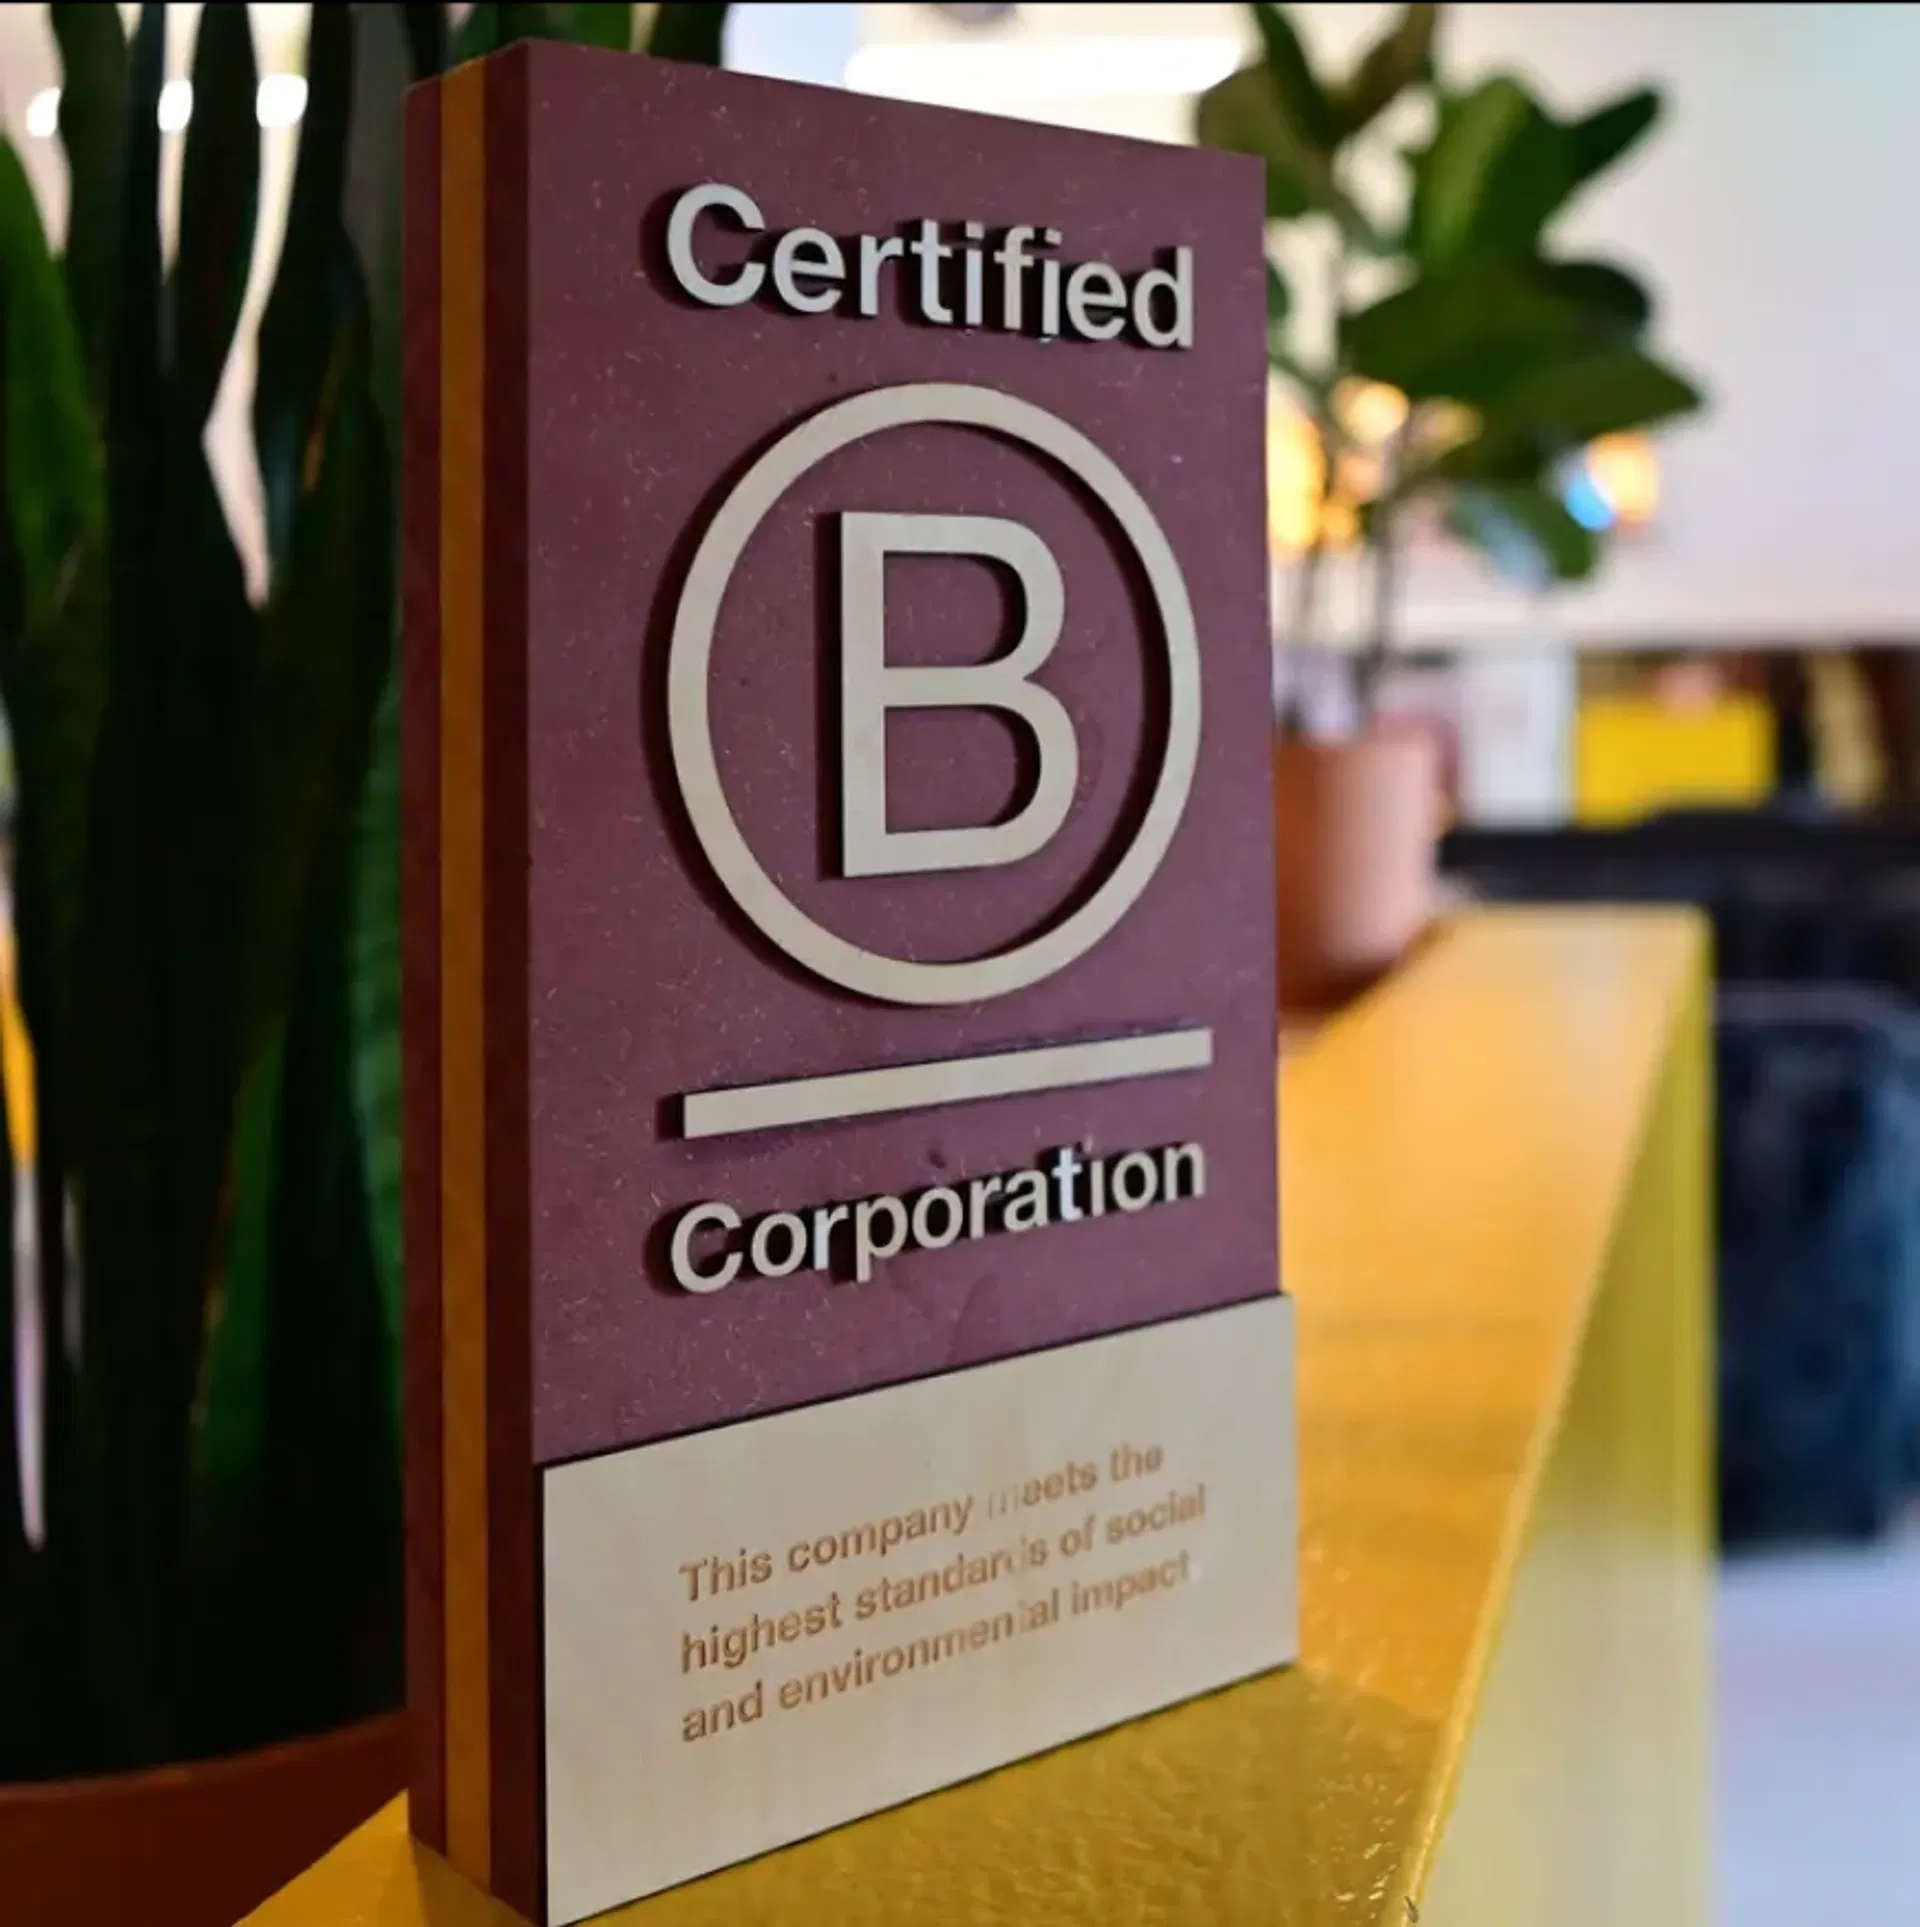 B-Corp certification